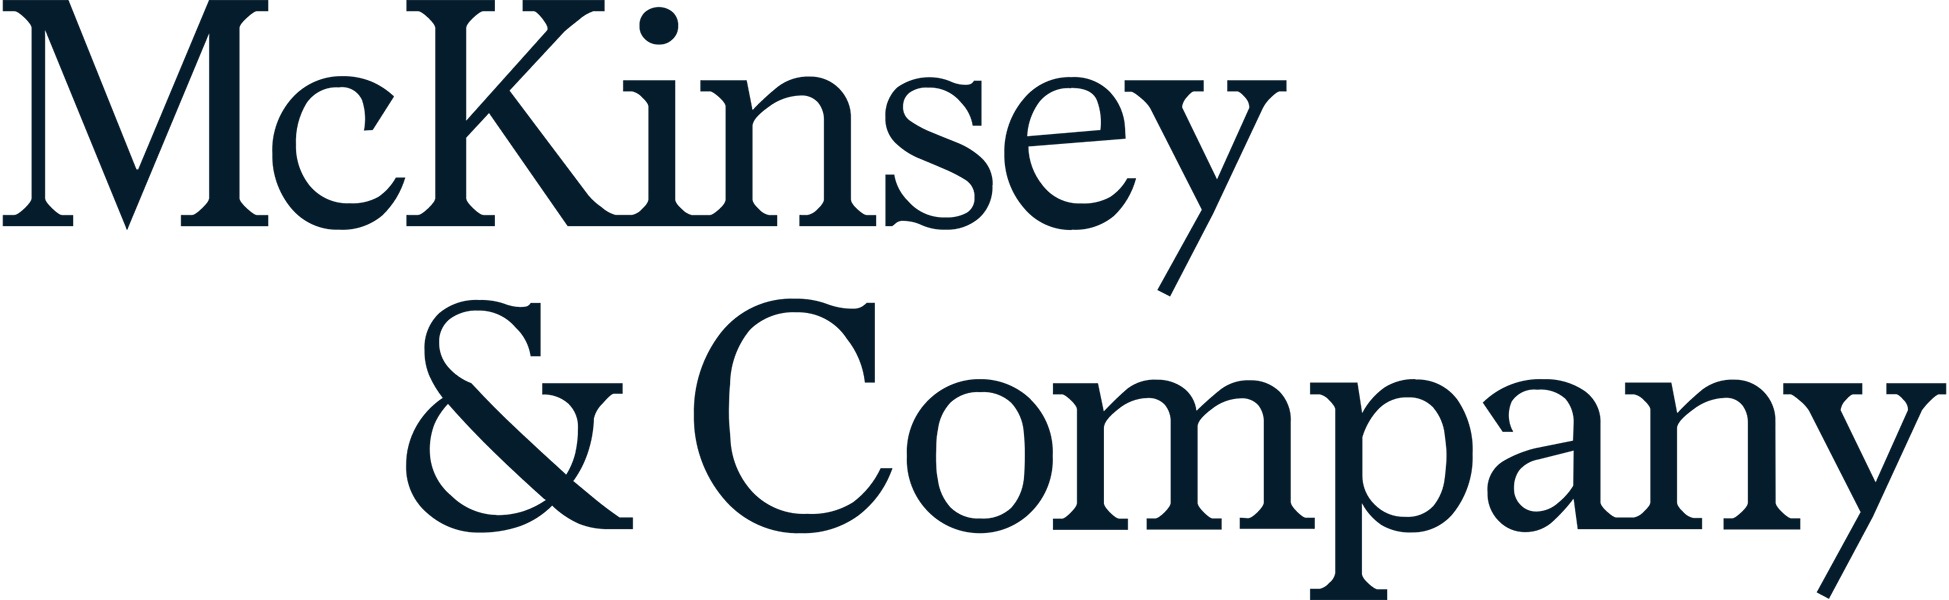 McKinsey & Company 社のロゴ